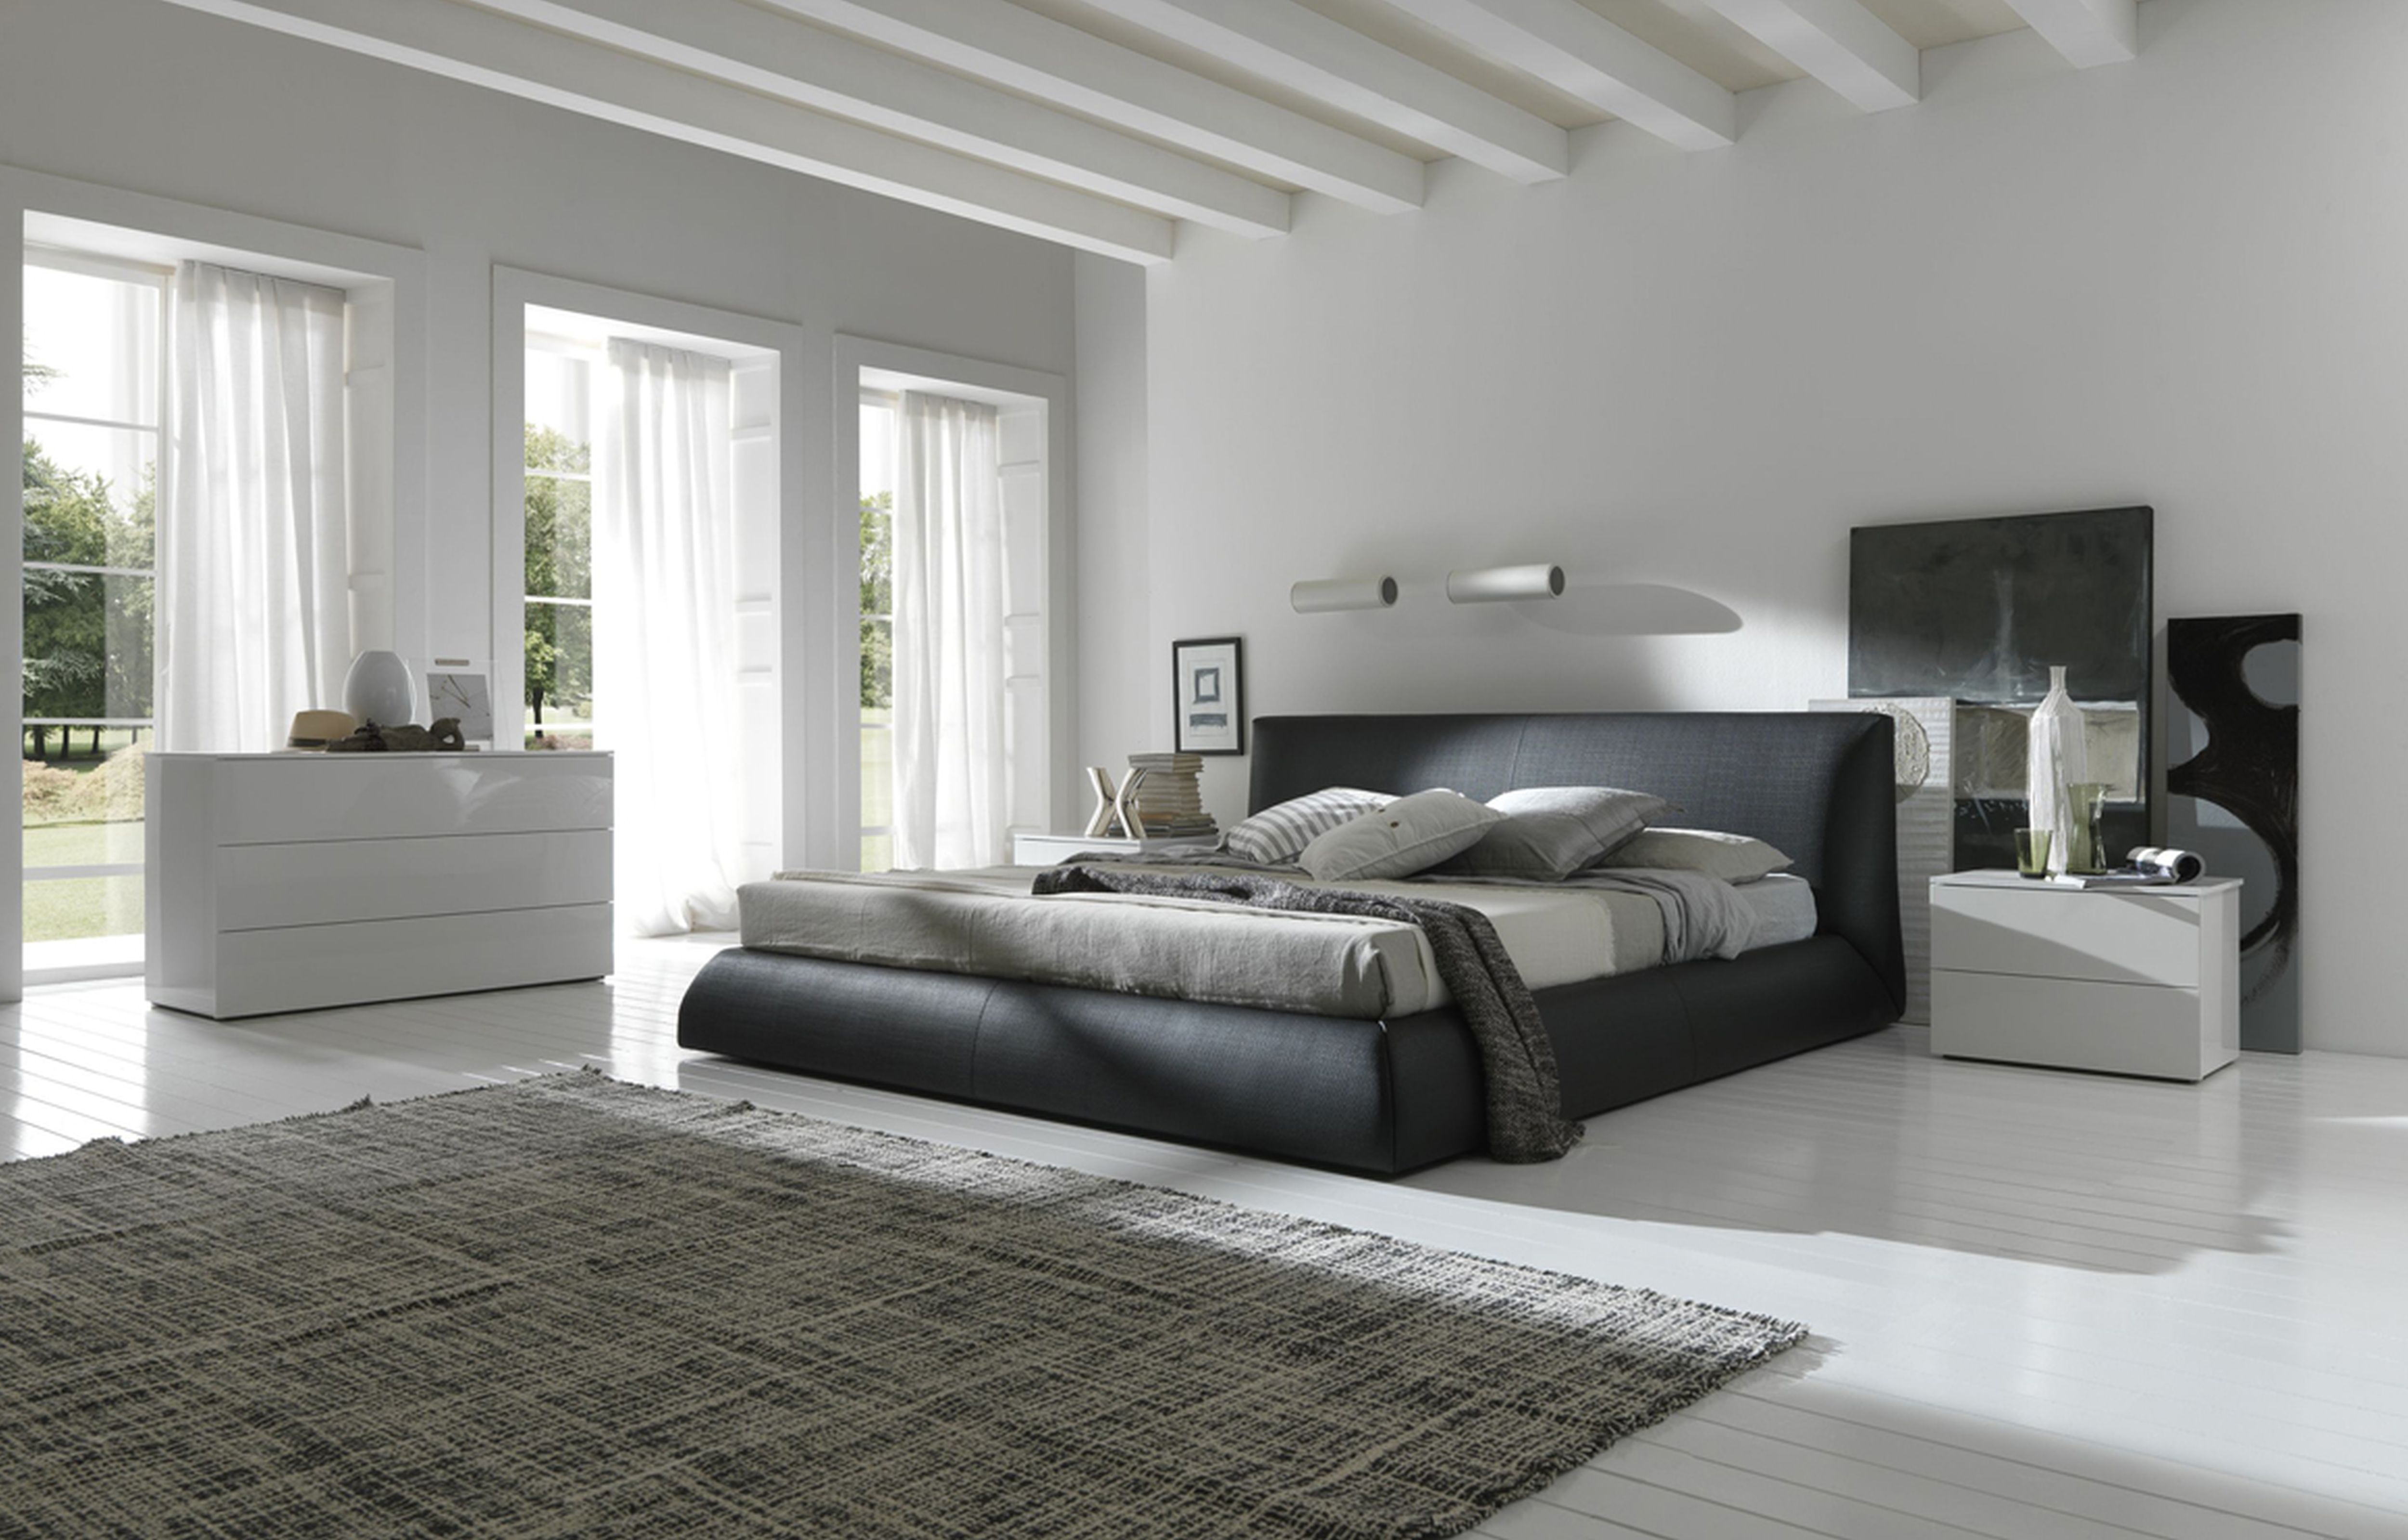 Modern Contemporary Bedroom: Sleek Comfort And Elegance